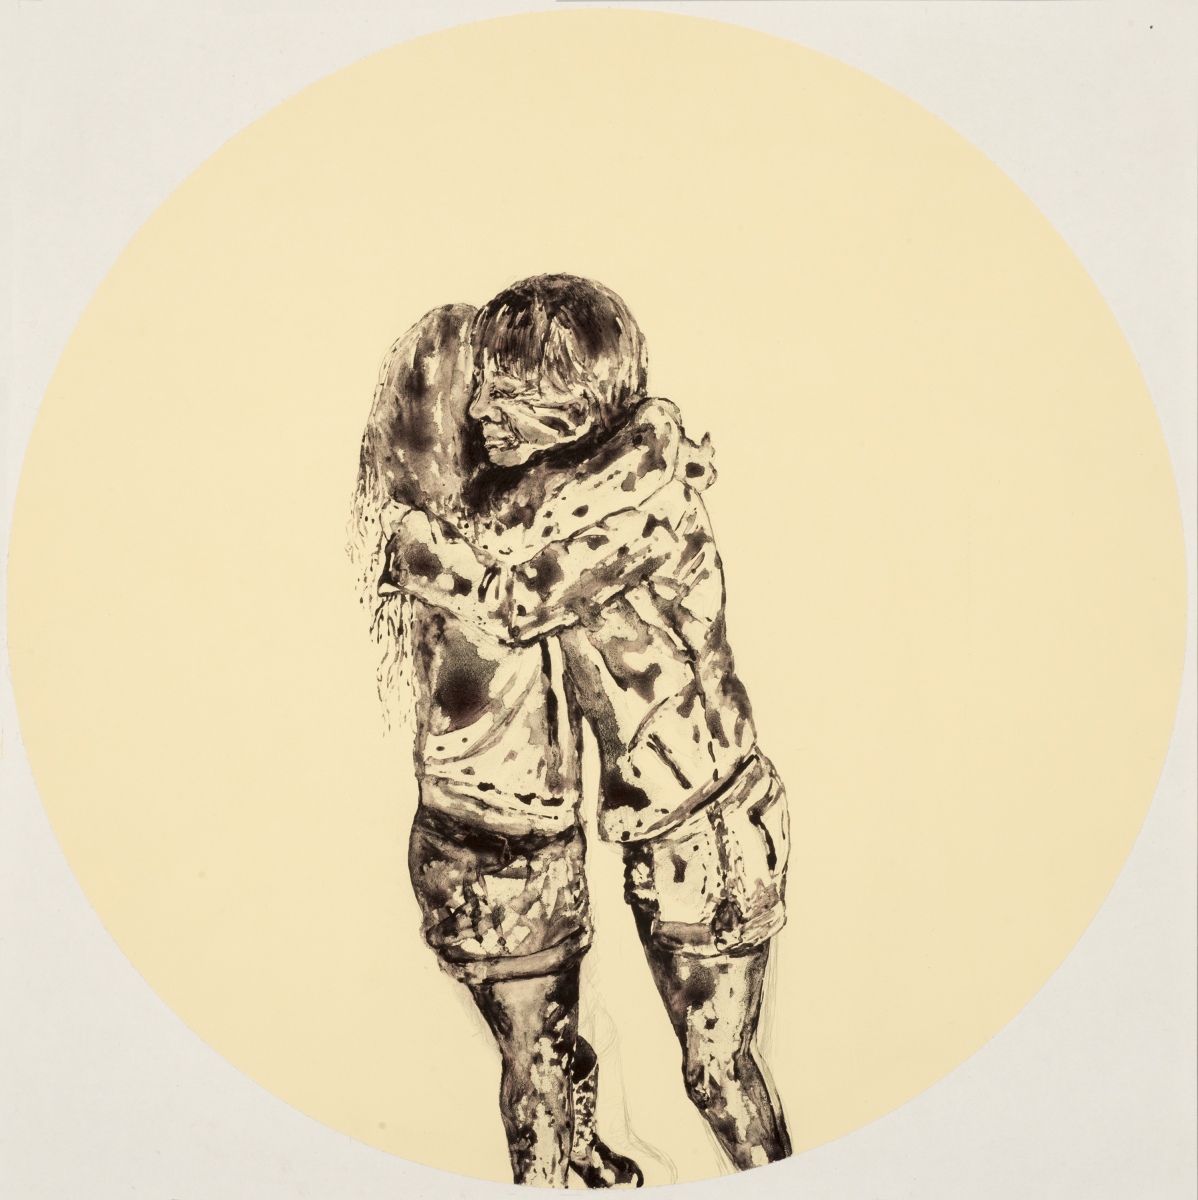 Detail, Hug Me Two Times, Girl, 2014, liquid graphite on vinyl applique, 13" circles, installation dimensions vary.